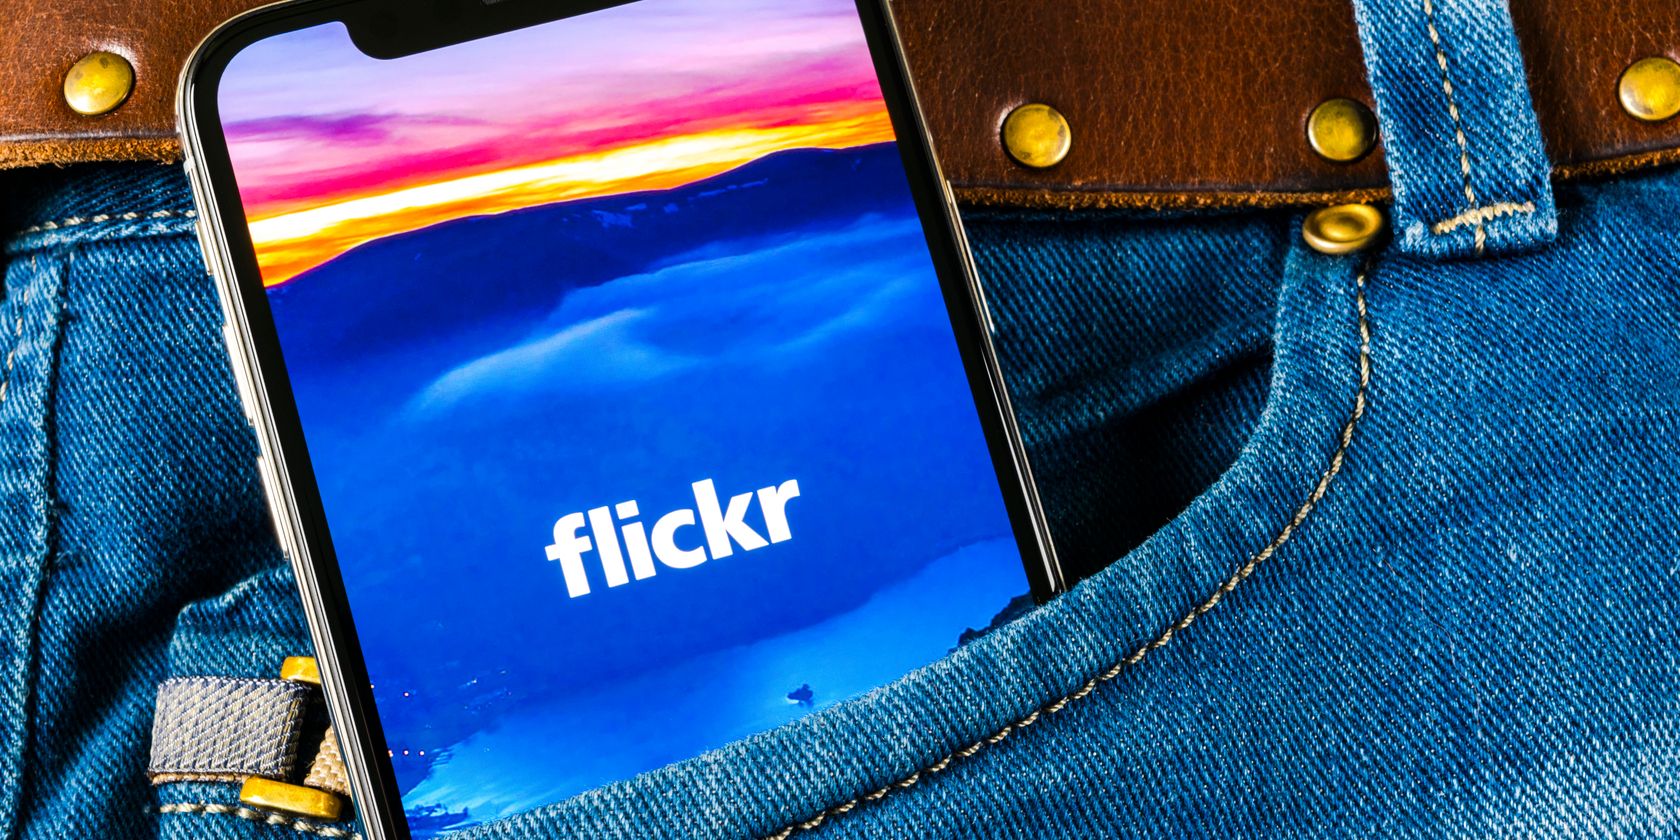 flickr logo on phone in jean pocket